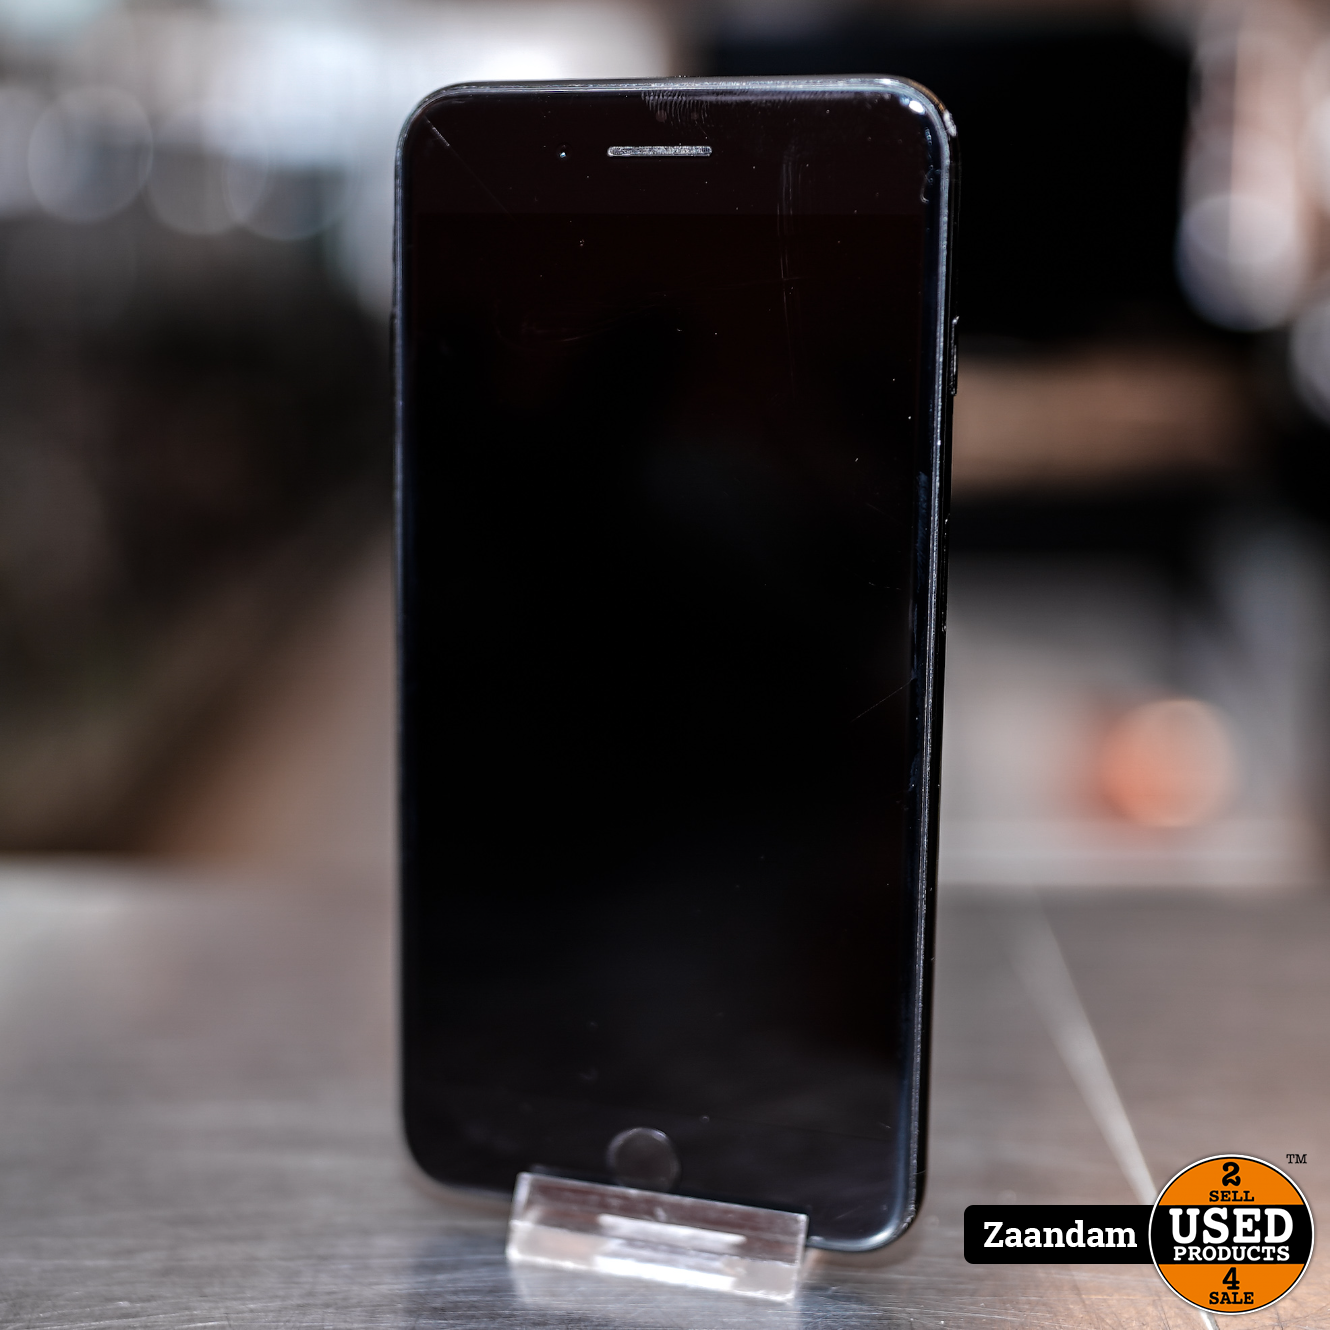 ziel Piraat tornado iPhone 7 Plus 128GB Zwart | Incl. garantie - Used Products Zaandam